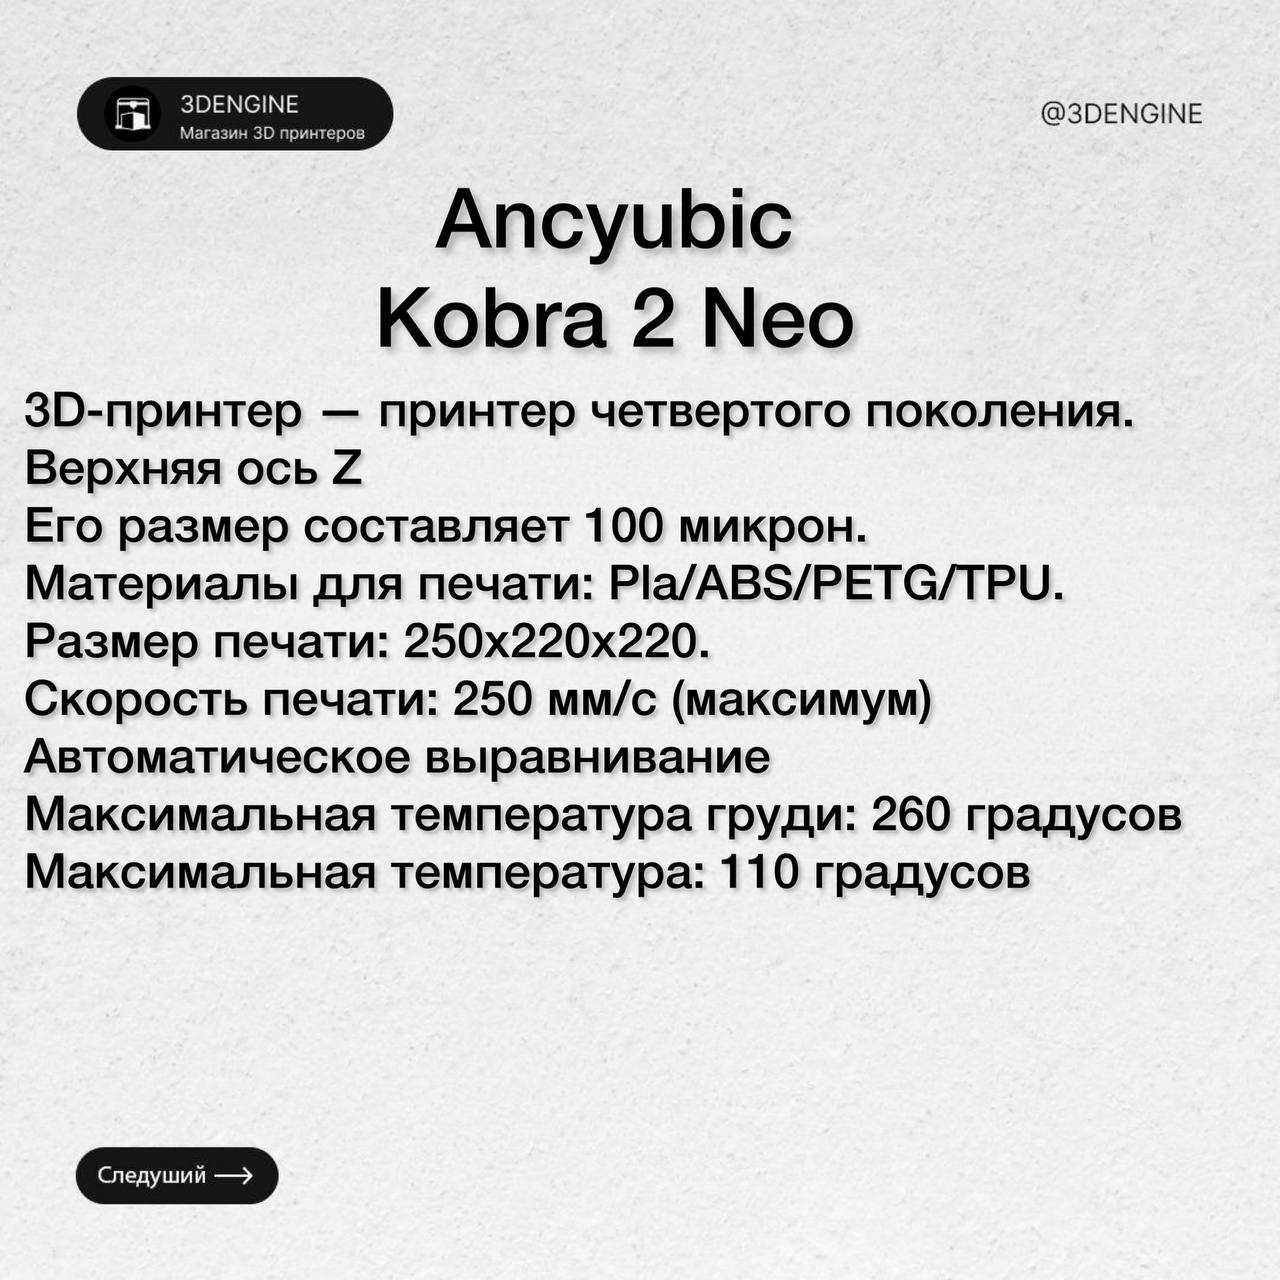 Anycubic Kobra 2.0 Neo 3D Printer, Эникубик Кобра 2.0 Нео 3Д Принтер